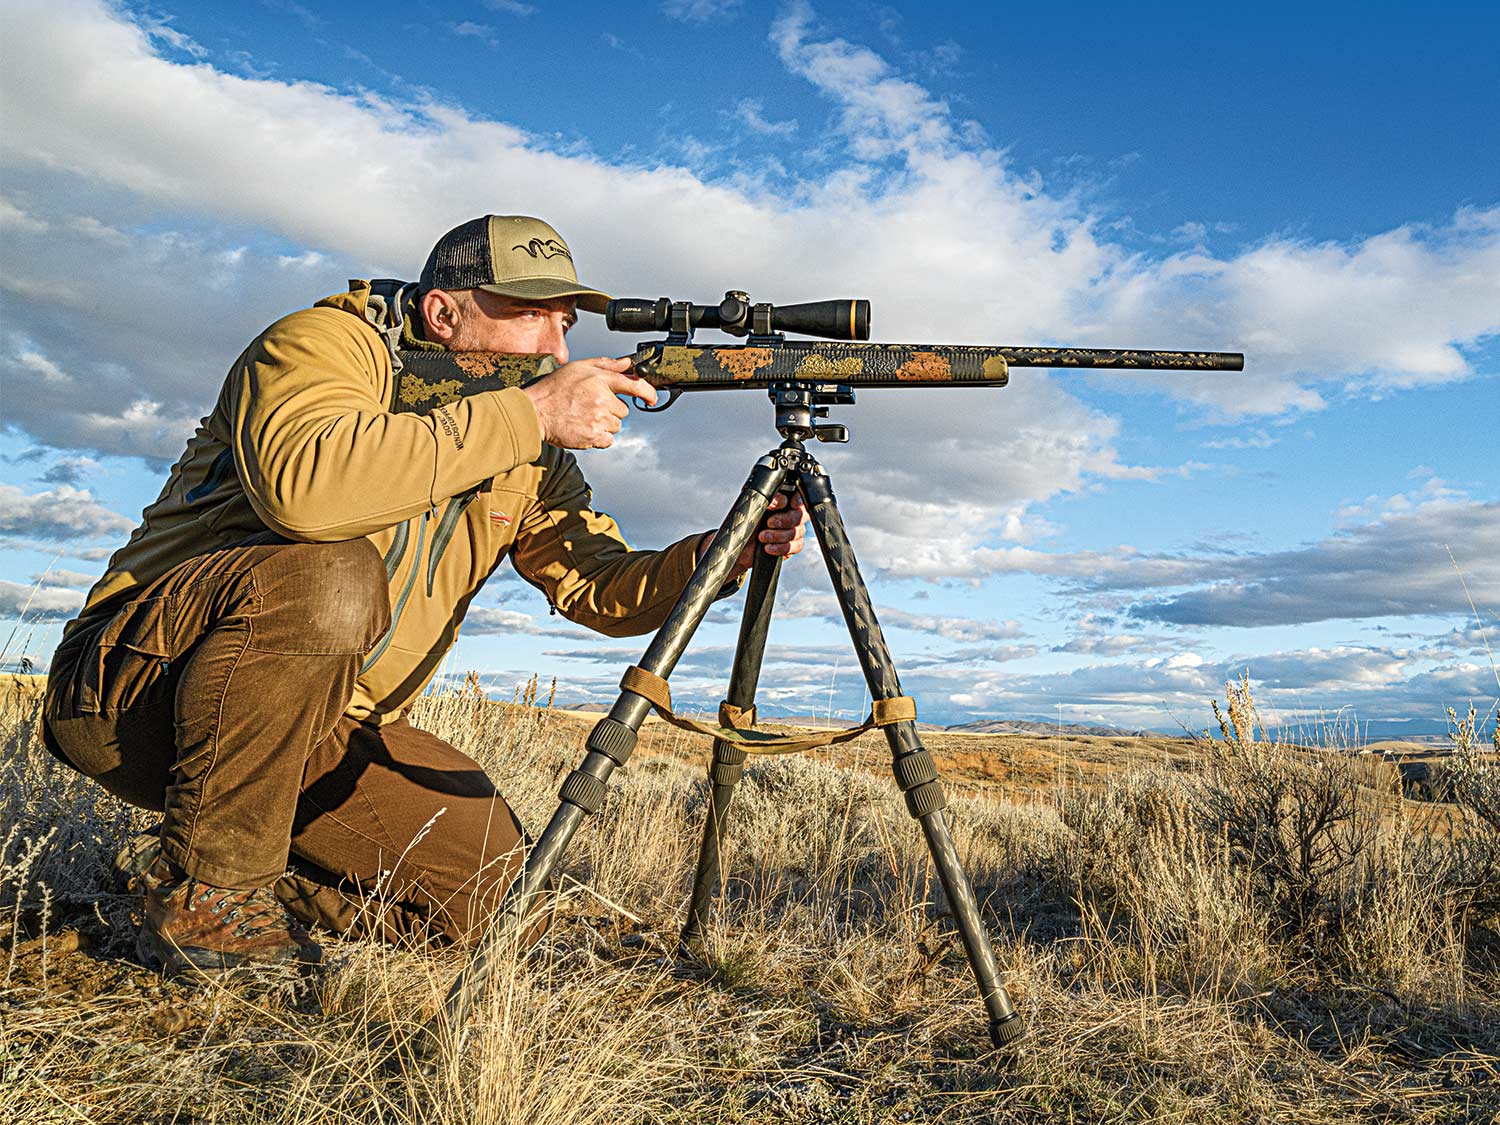 Hunter aiming a rifle in an open field.